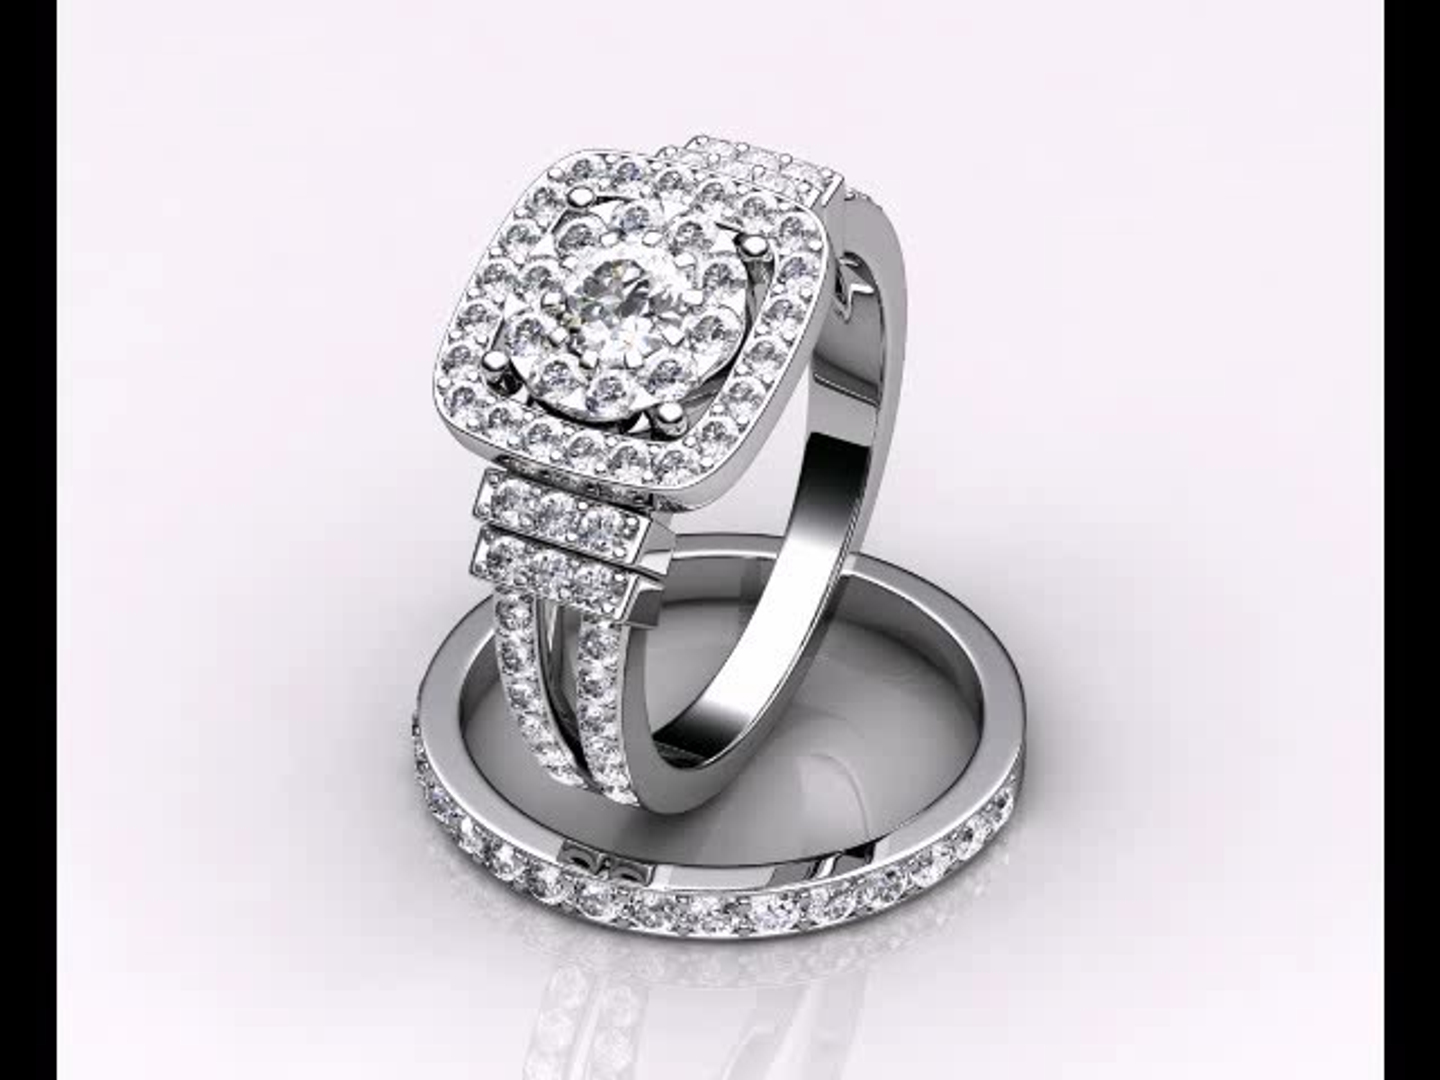 3d model set wedding engagement rings https://p.turbosquid.com/ts-thumb/JY/0wbtzp/ZS/weddingringbandset/jpg/1706207667/1920x1080/turn_fit_q99/dd27084583d310d8b5b50caa783a0276441b86e1/weddingringbandset-1.jpg